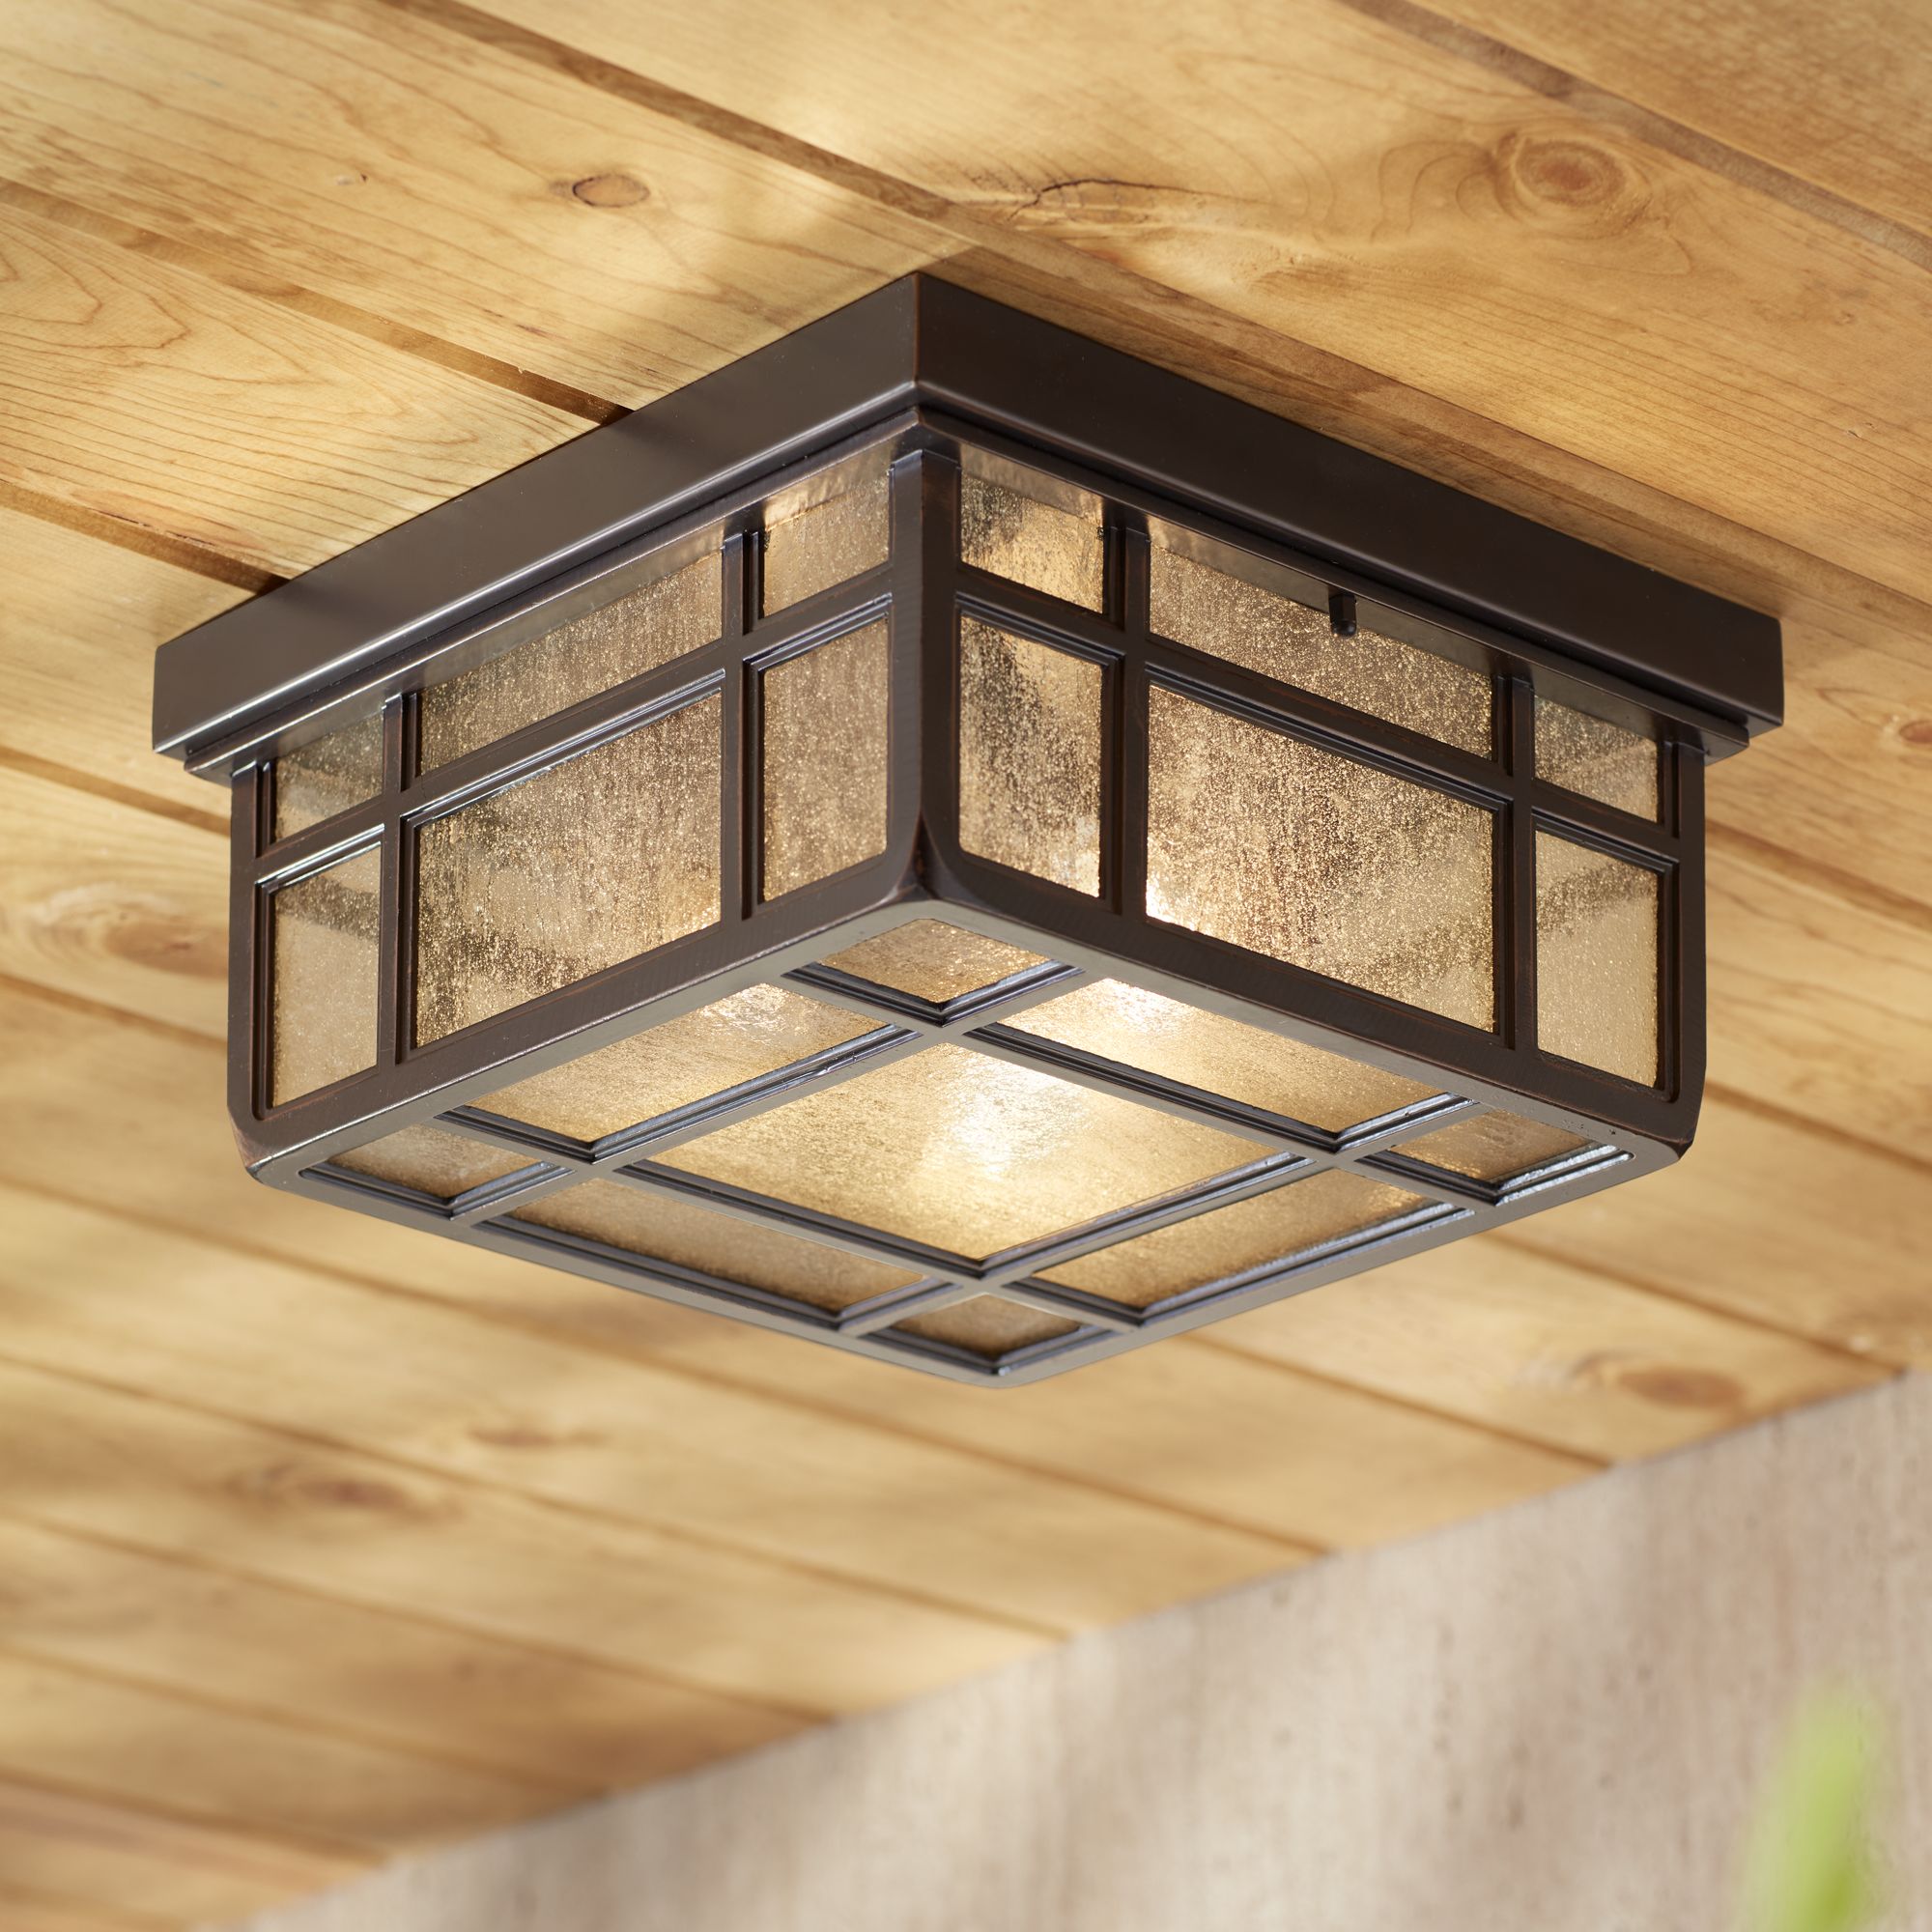 Details about   Outdoor Porch Flush Mount Ceiling Light Fixture Glass Shade Exterior Lighting 